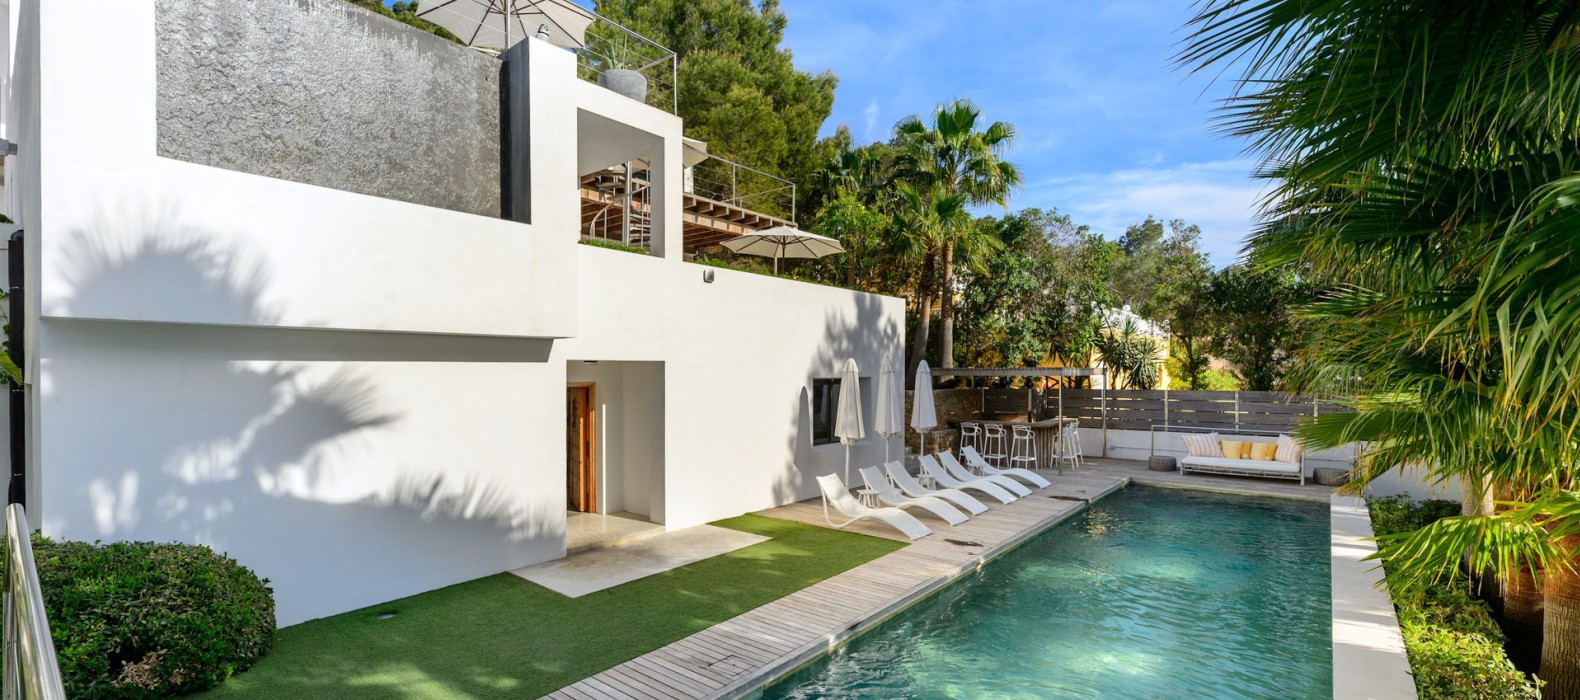 Pool view of Casa Elegance in Ibiza